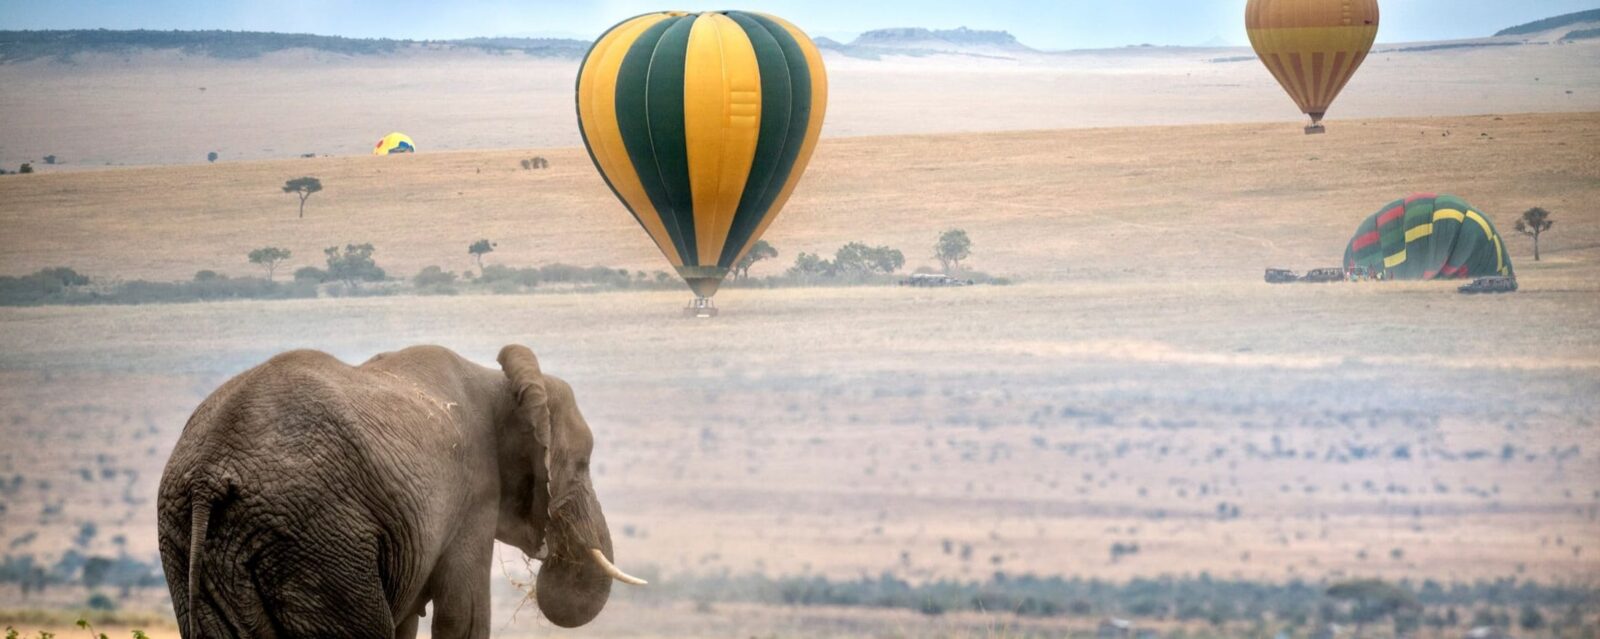 Ballon Safaris - Top 5 things to do in asai Mara National Reserve